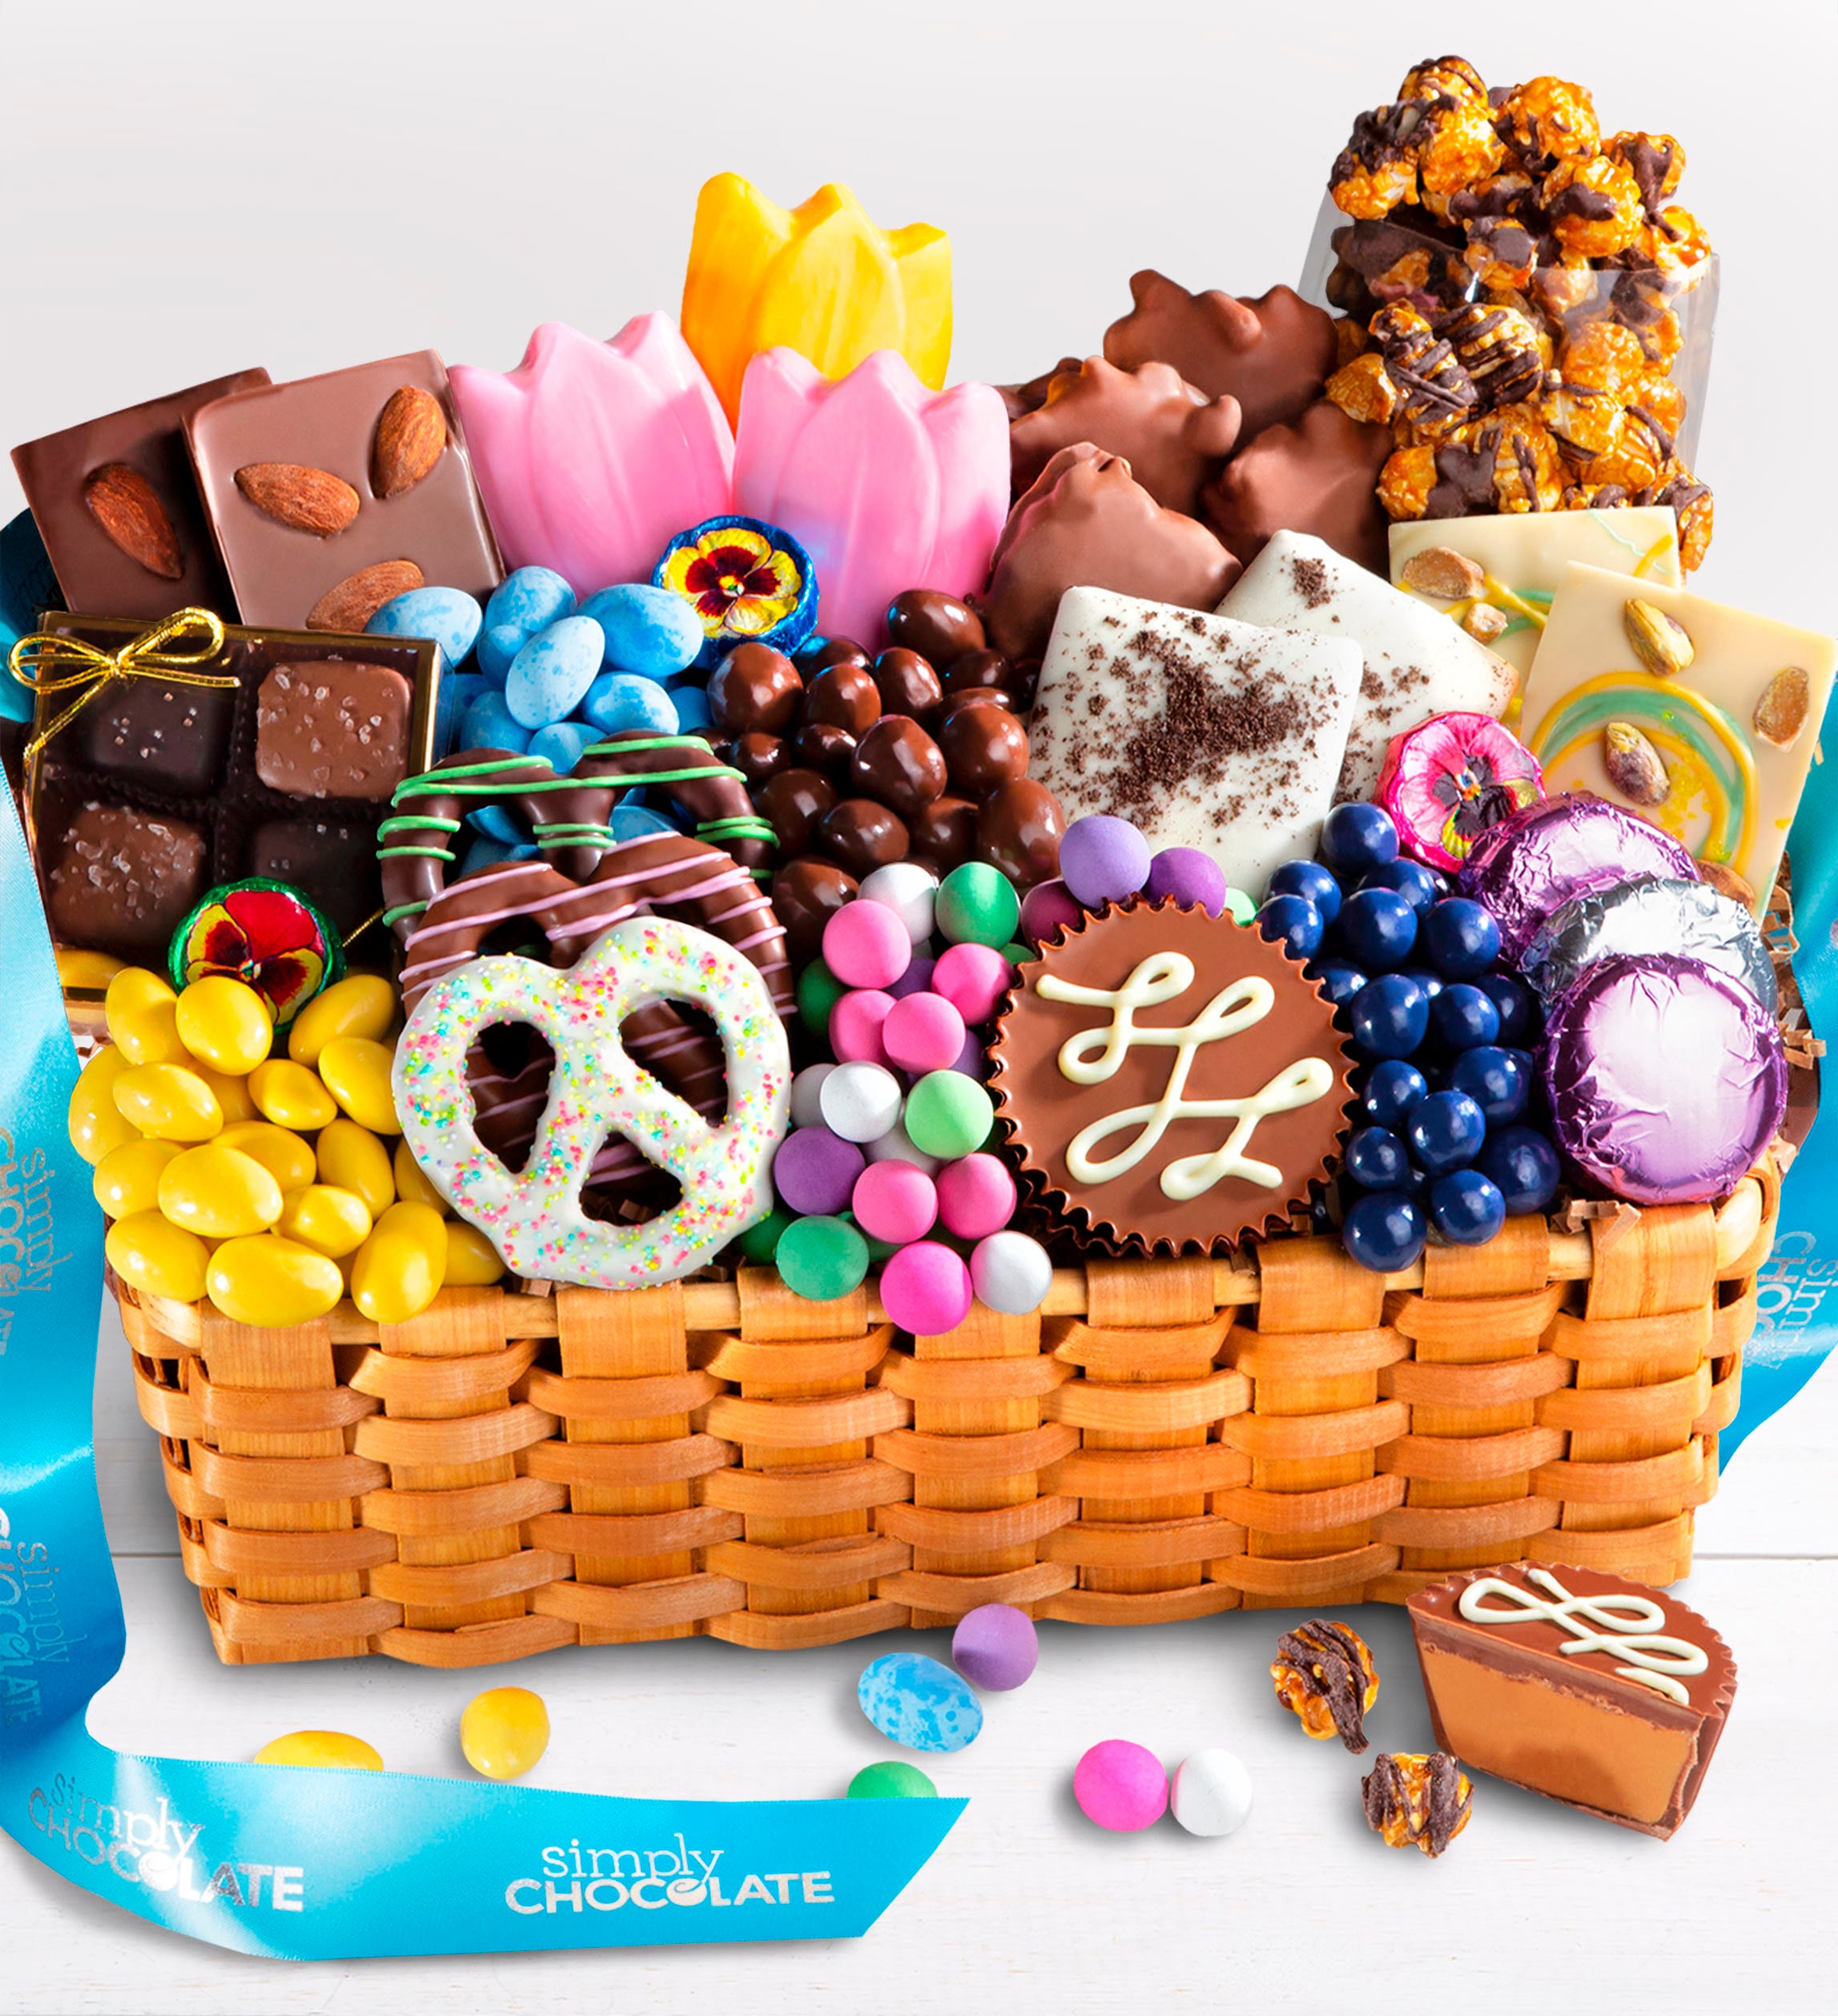 Simply Chocolate Grand Celebrate Spring Basket